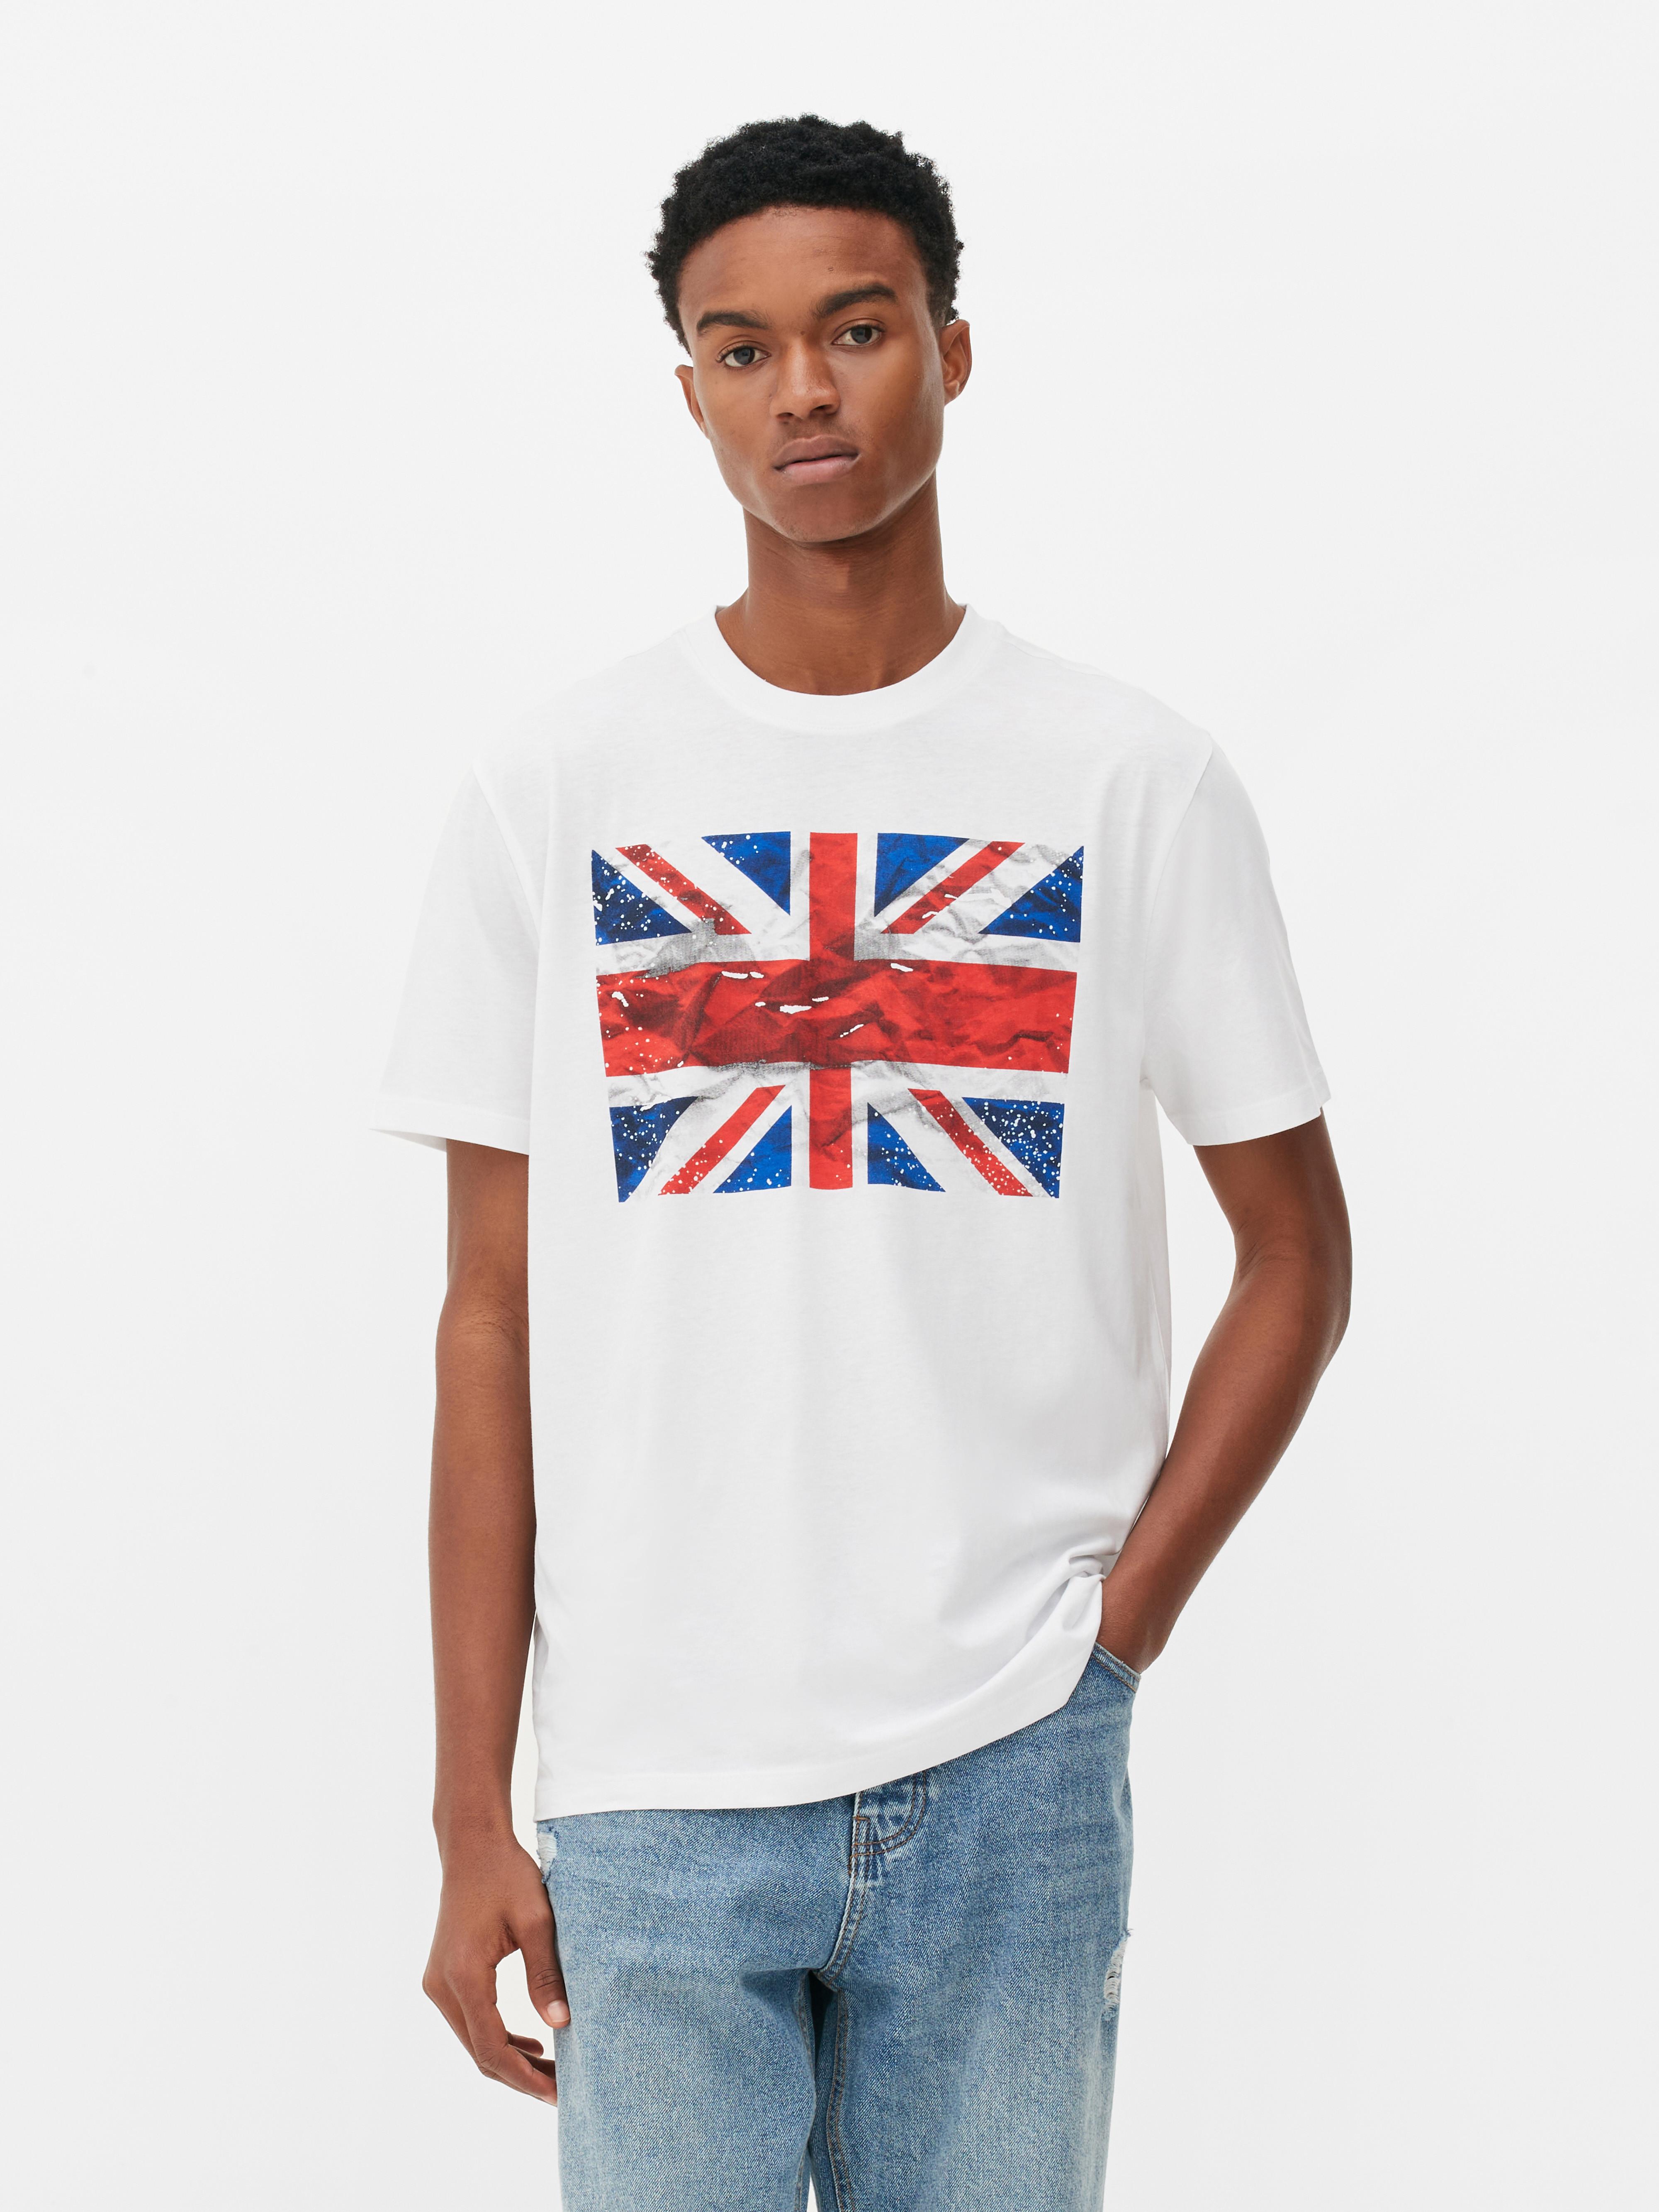 Union T-shirt Primark